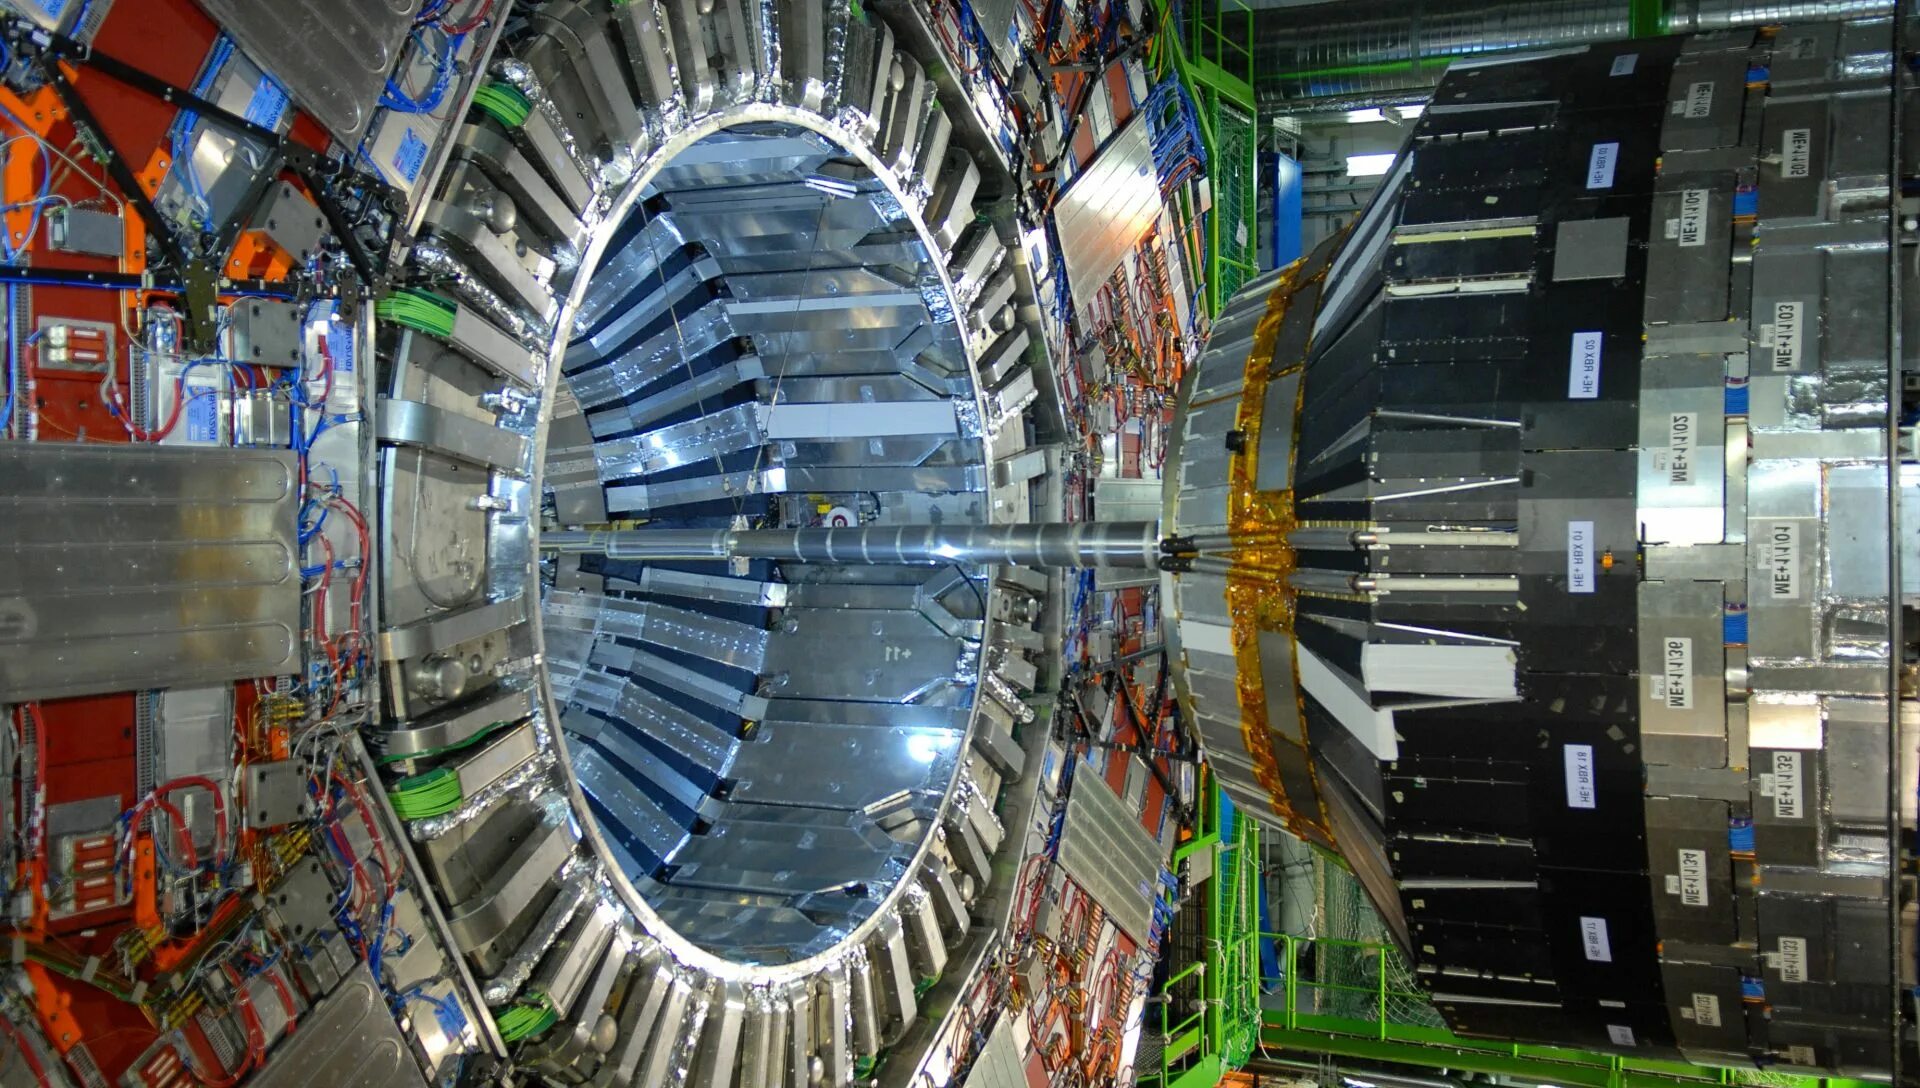 ЦЕРН коллайдер. Большой адронный коллайдер ЦЕРН. Швейцария ЦЕРН коллайдер. Адронный коллайдер в Женеве. Андроидный коллайдер это